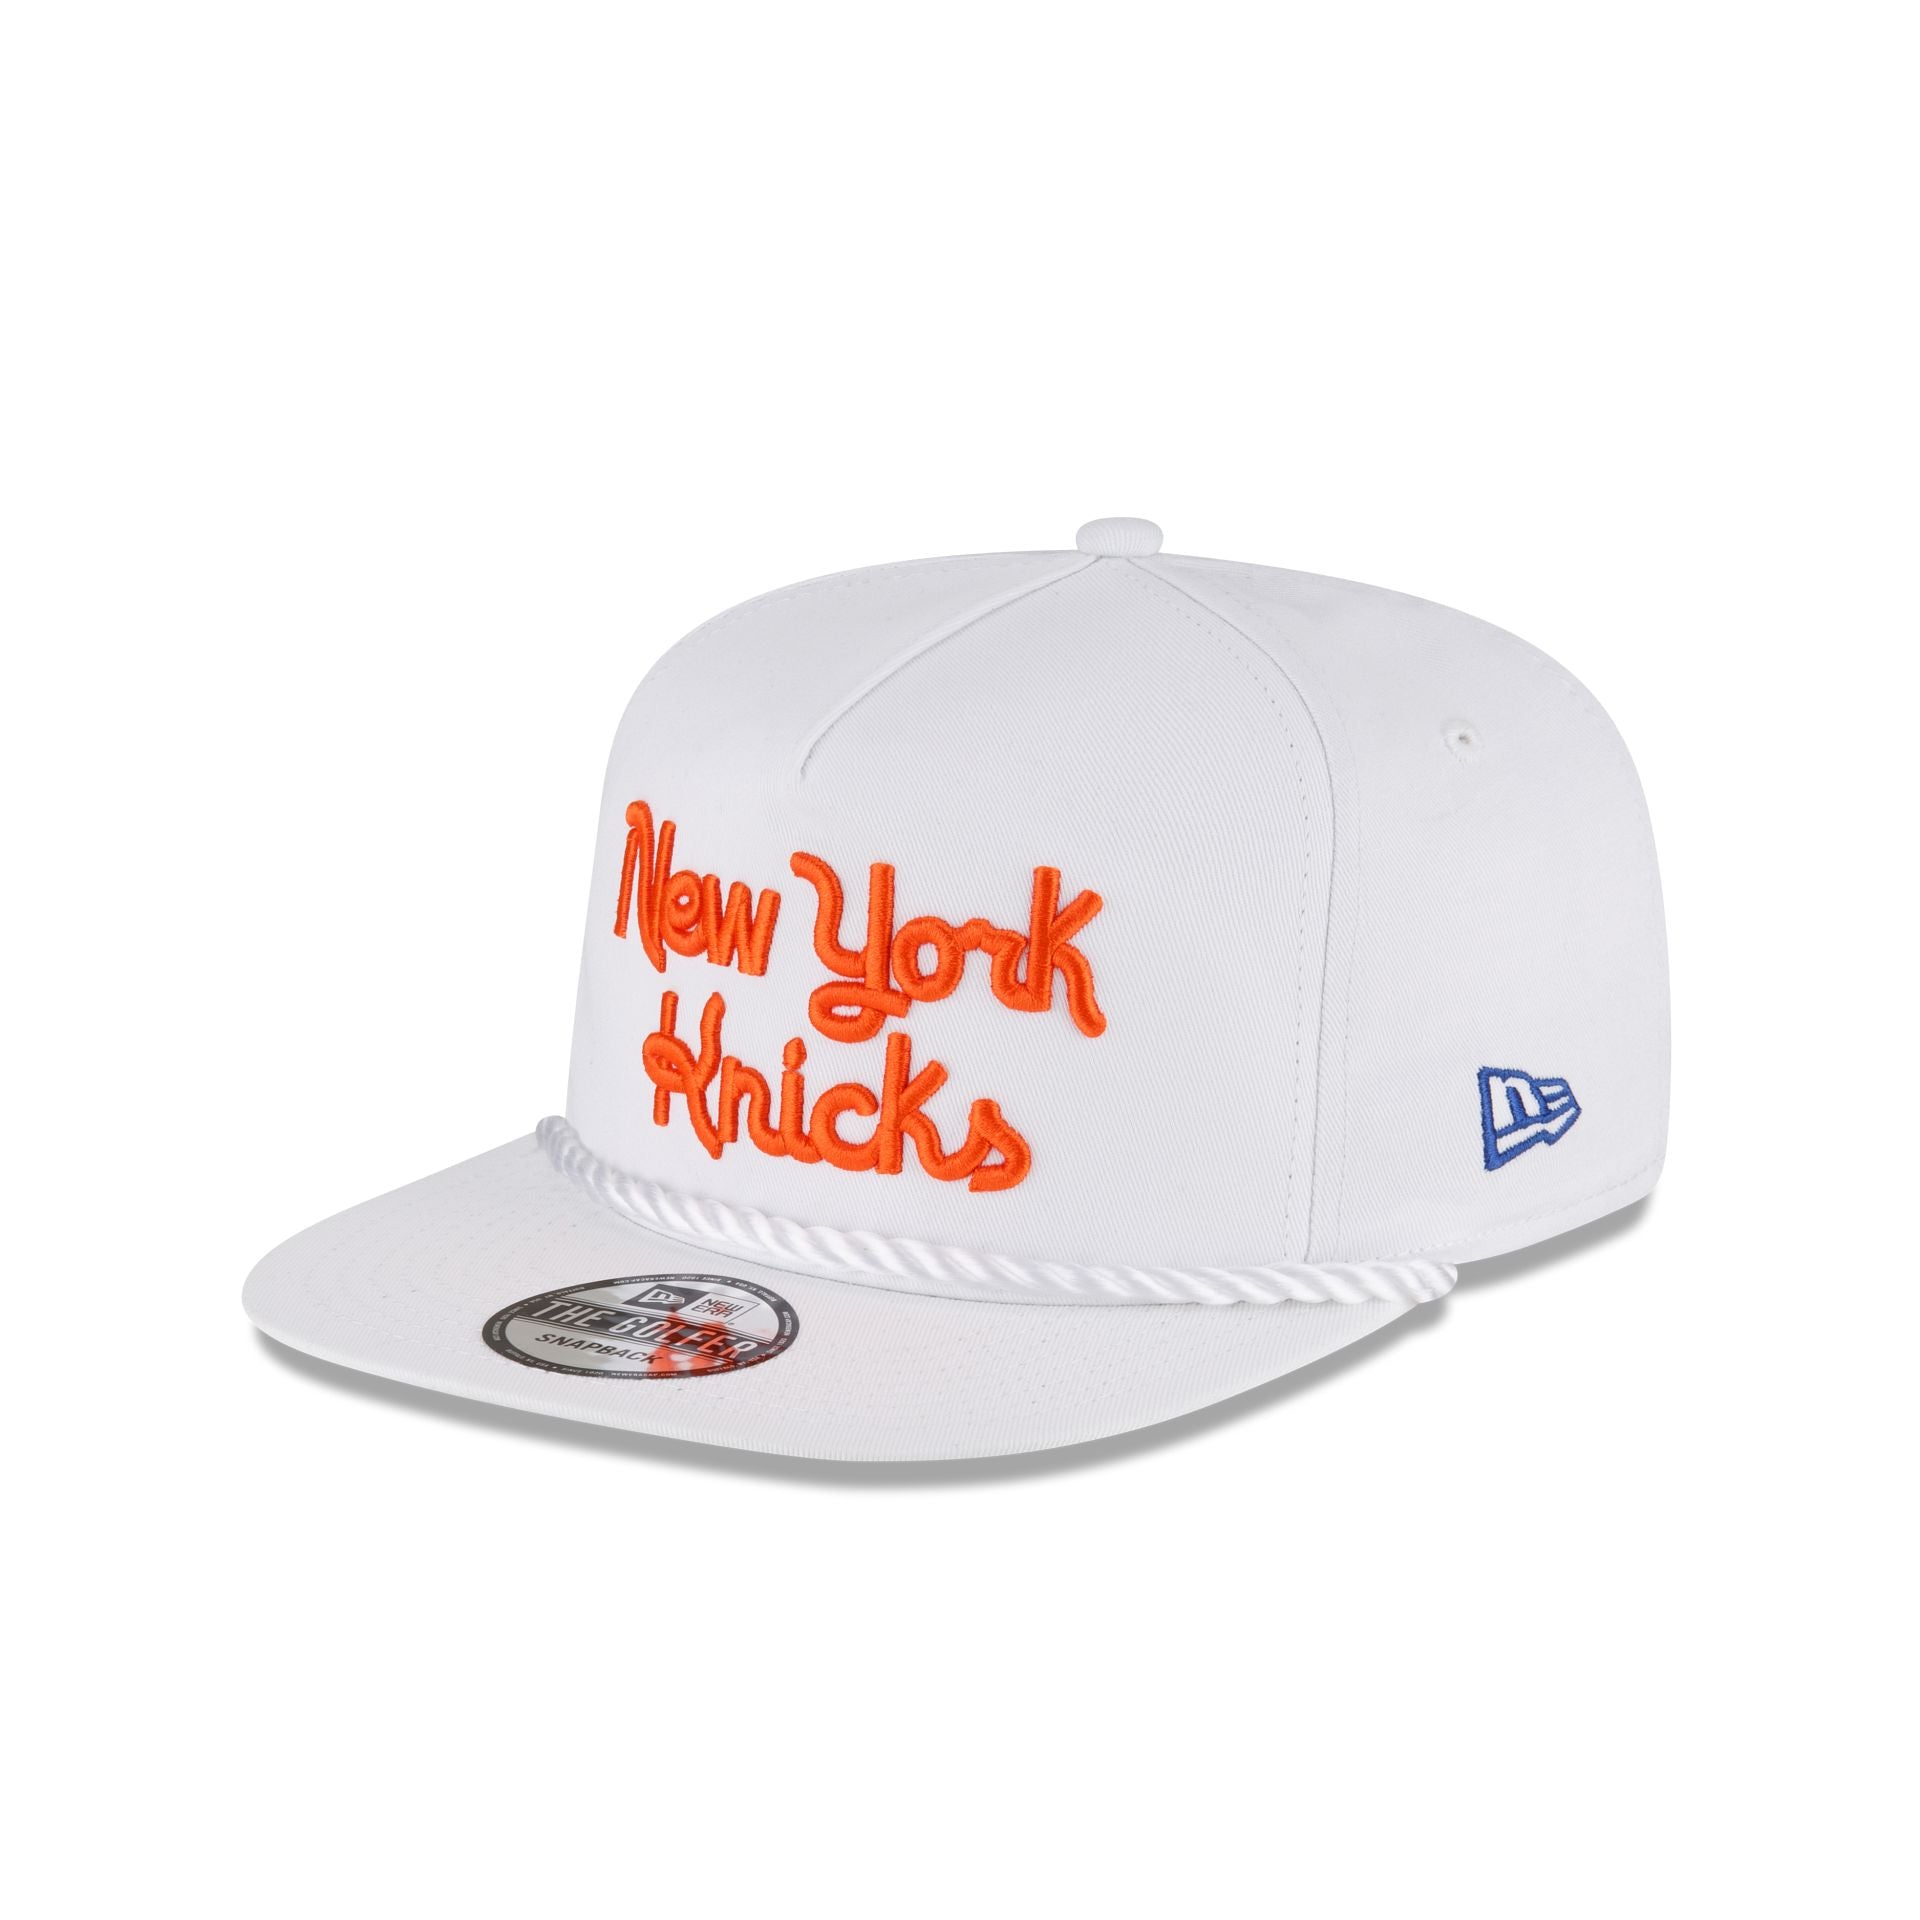 New Era Knicks Retro Title Snapback Hat